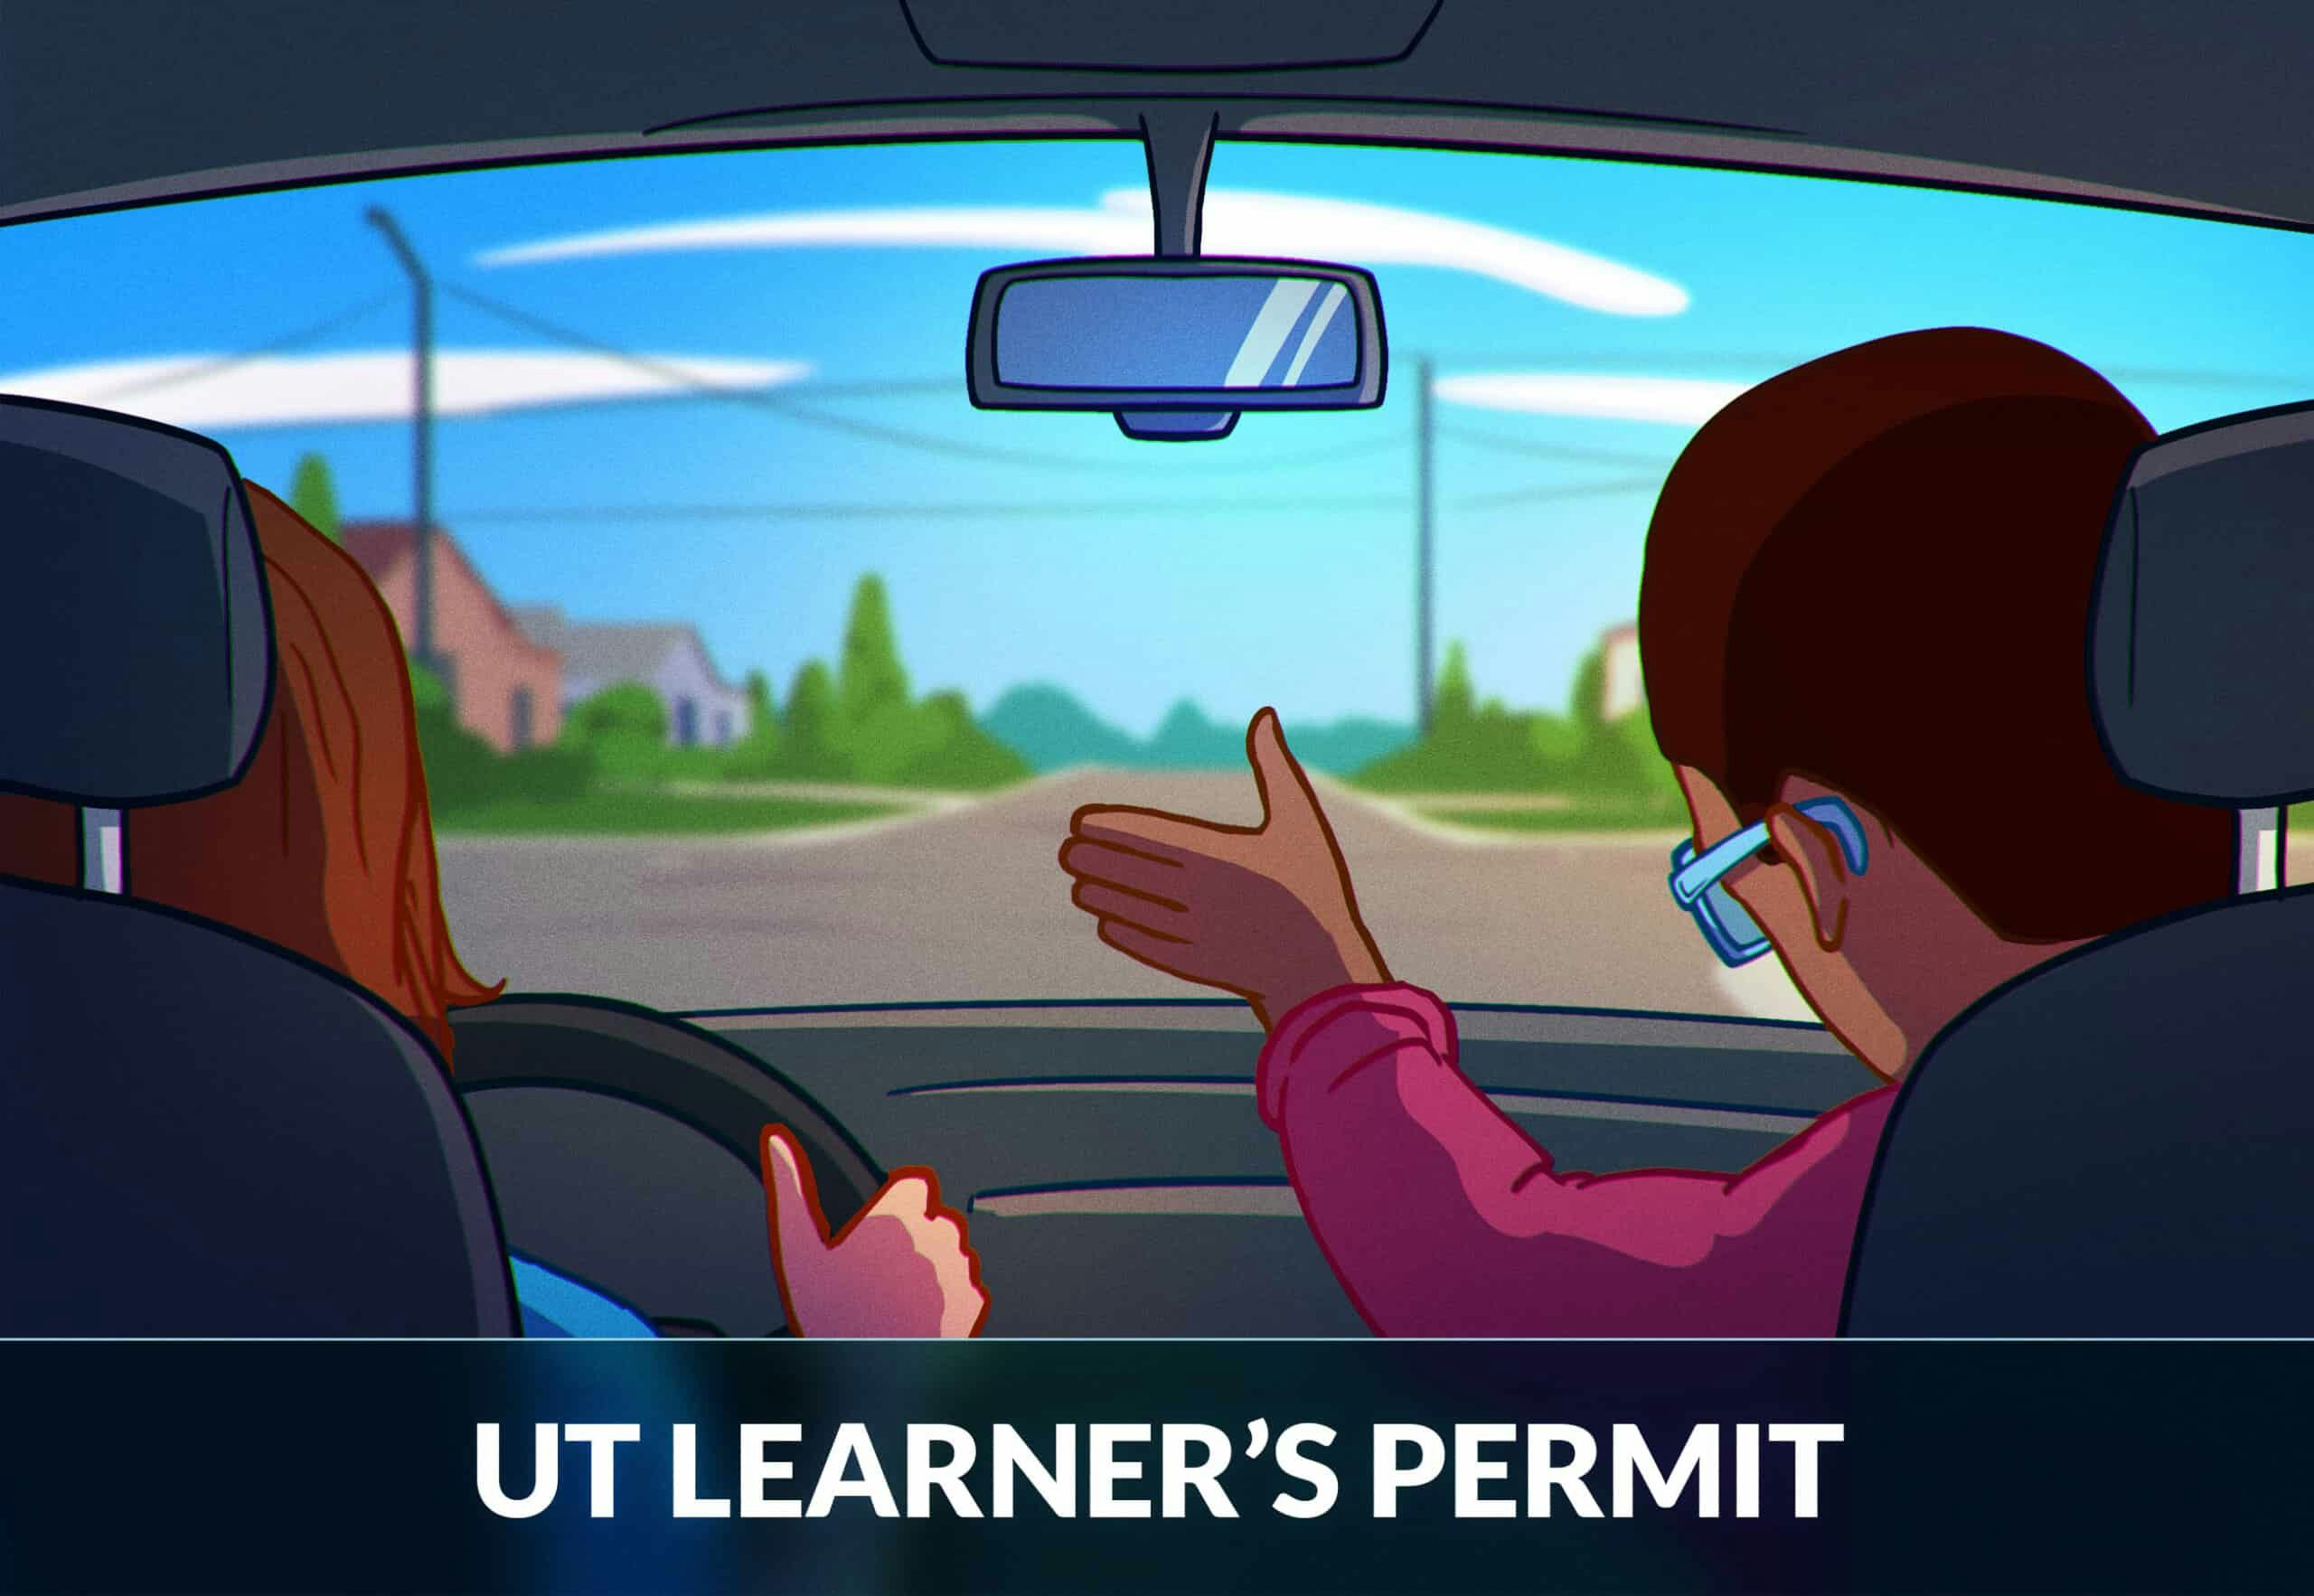 Utah (UT) Learner's Permit